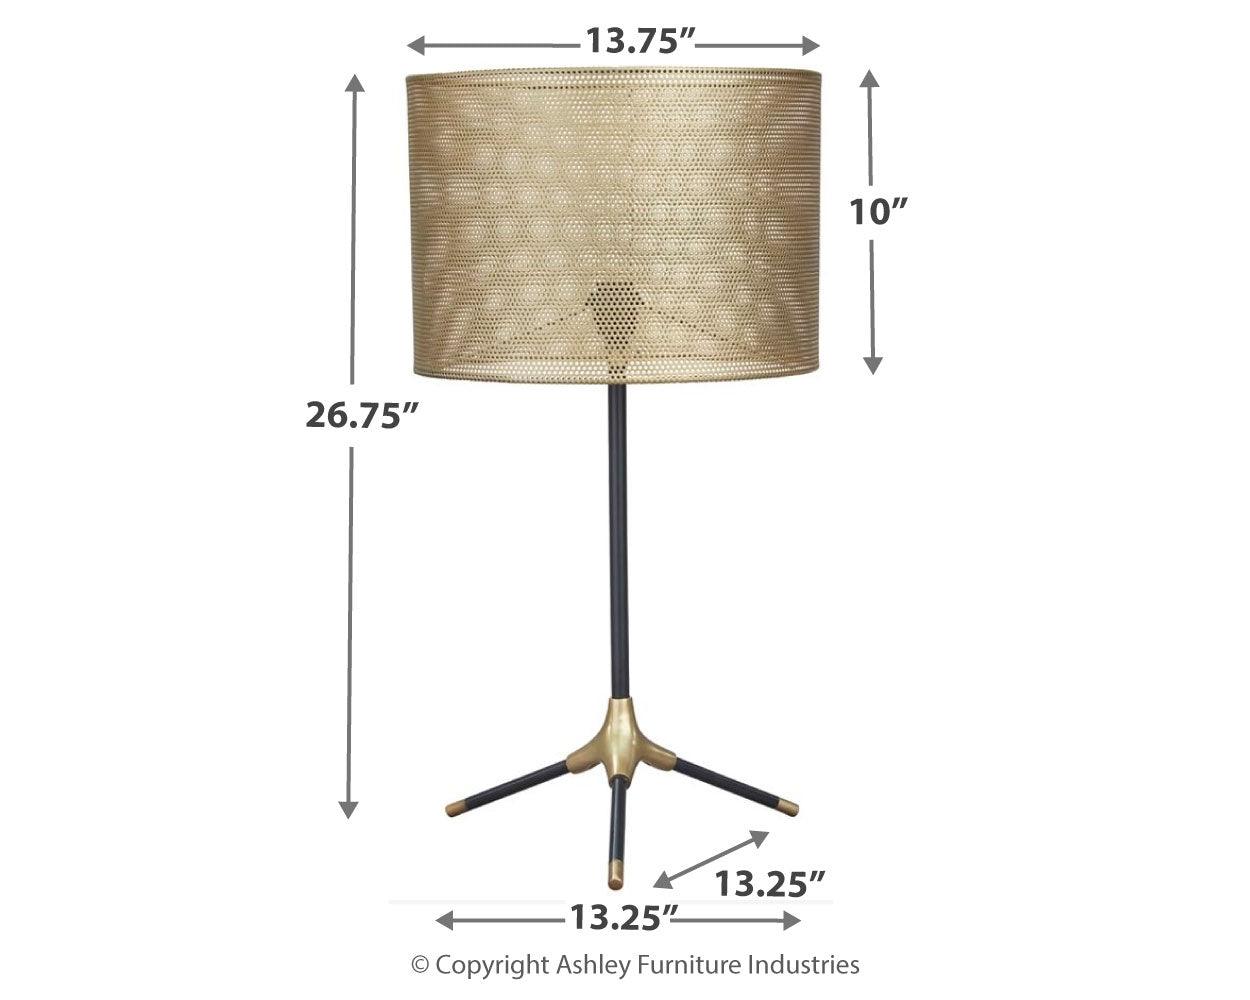 Mance Gray/brass Finish Table Lamp - Ella Furniture